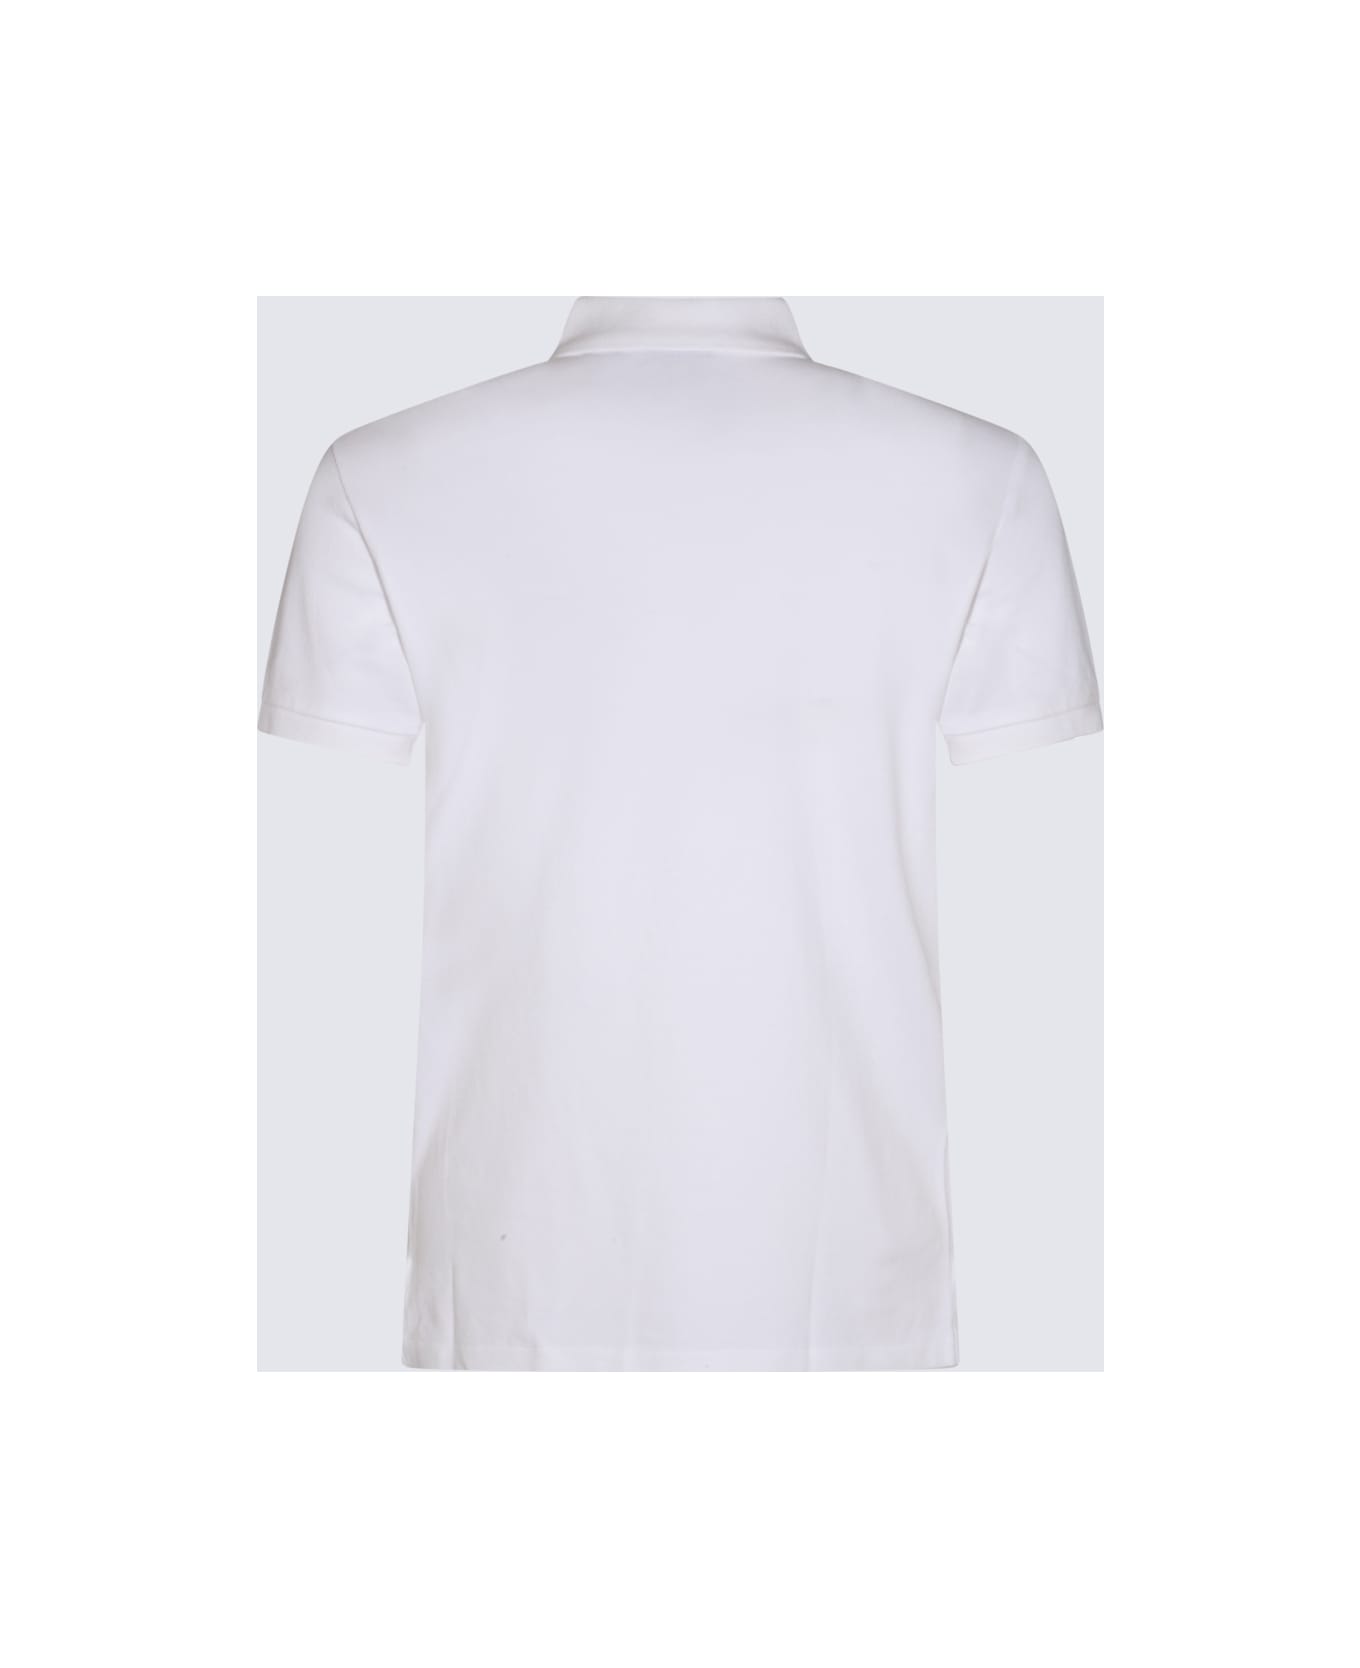 Polo Ralph Lauren White And Blue Cotton Polo Shirt - White